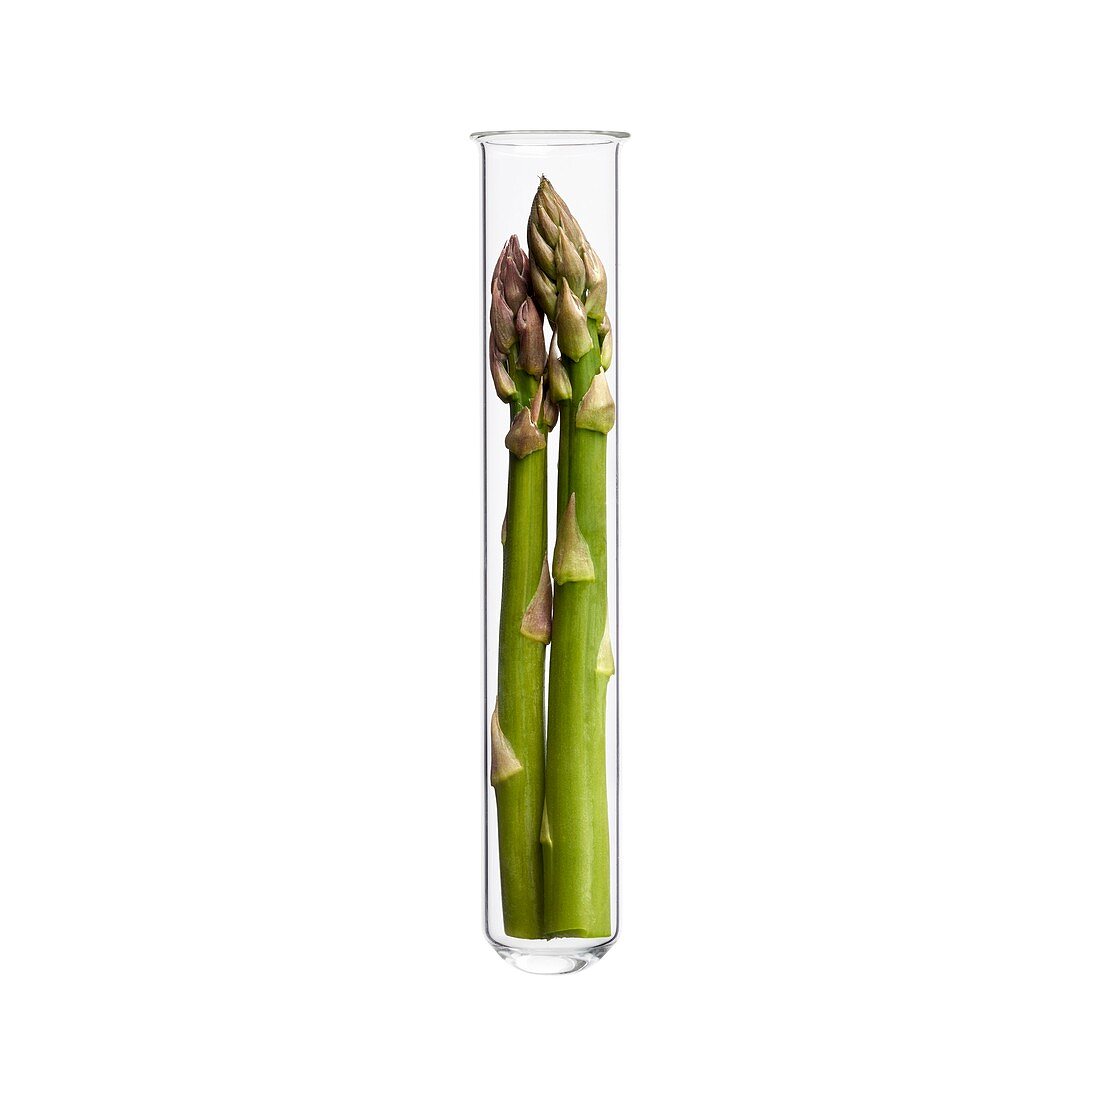 Asparagus in test tube